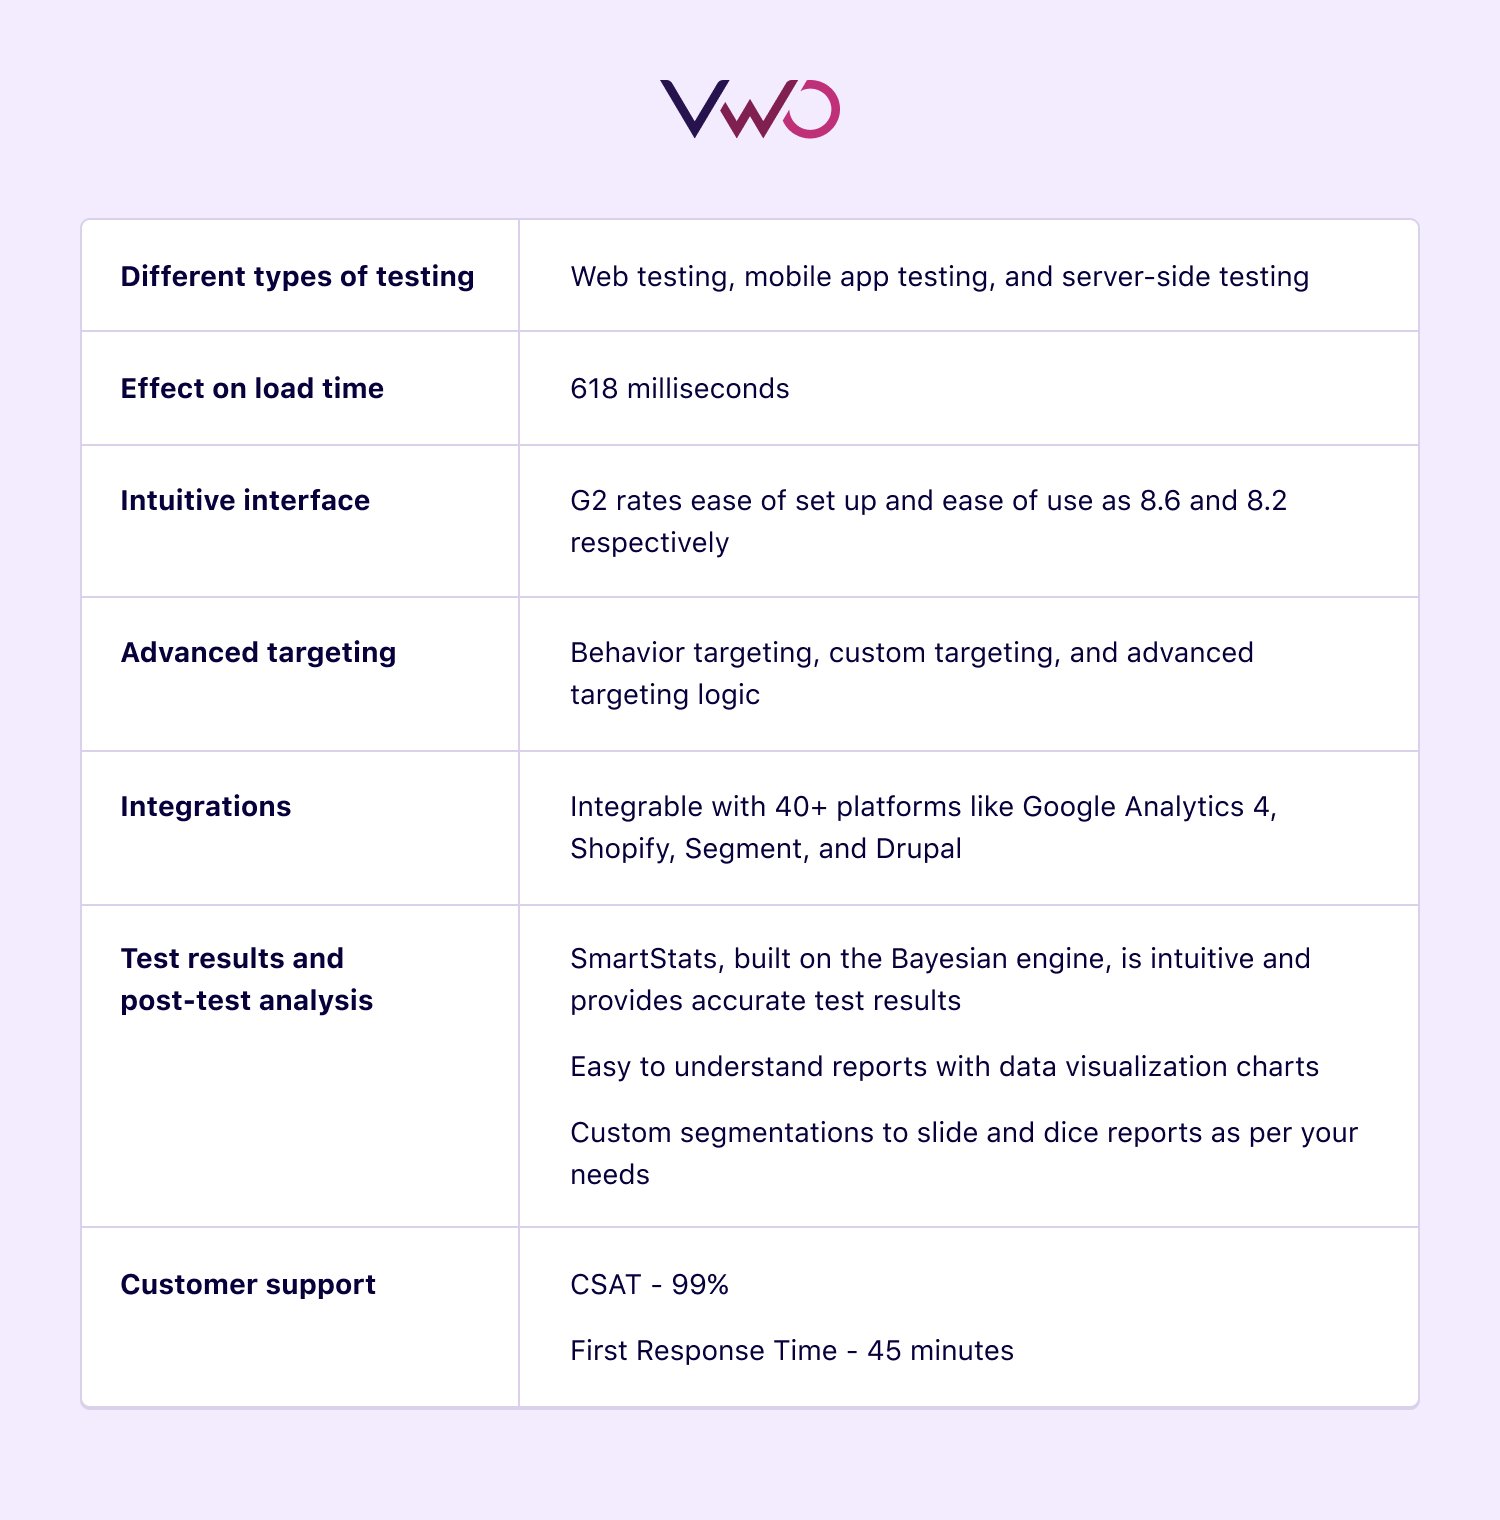 VWO Product Features - A/B Testing Platform